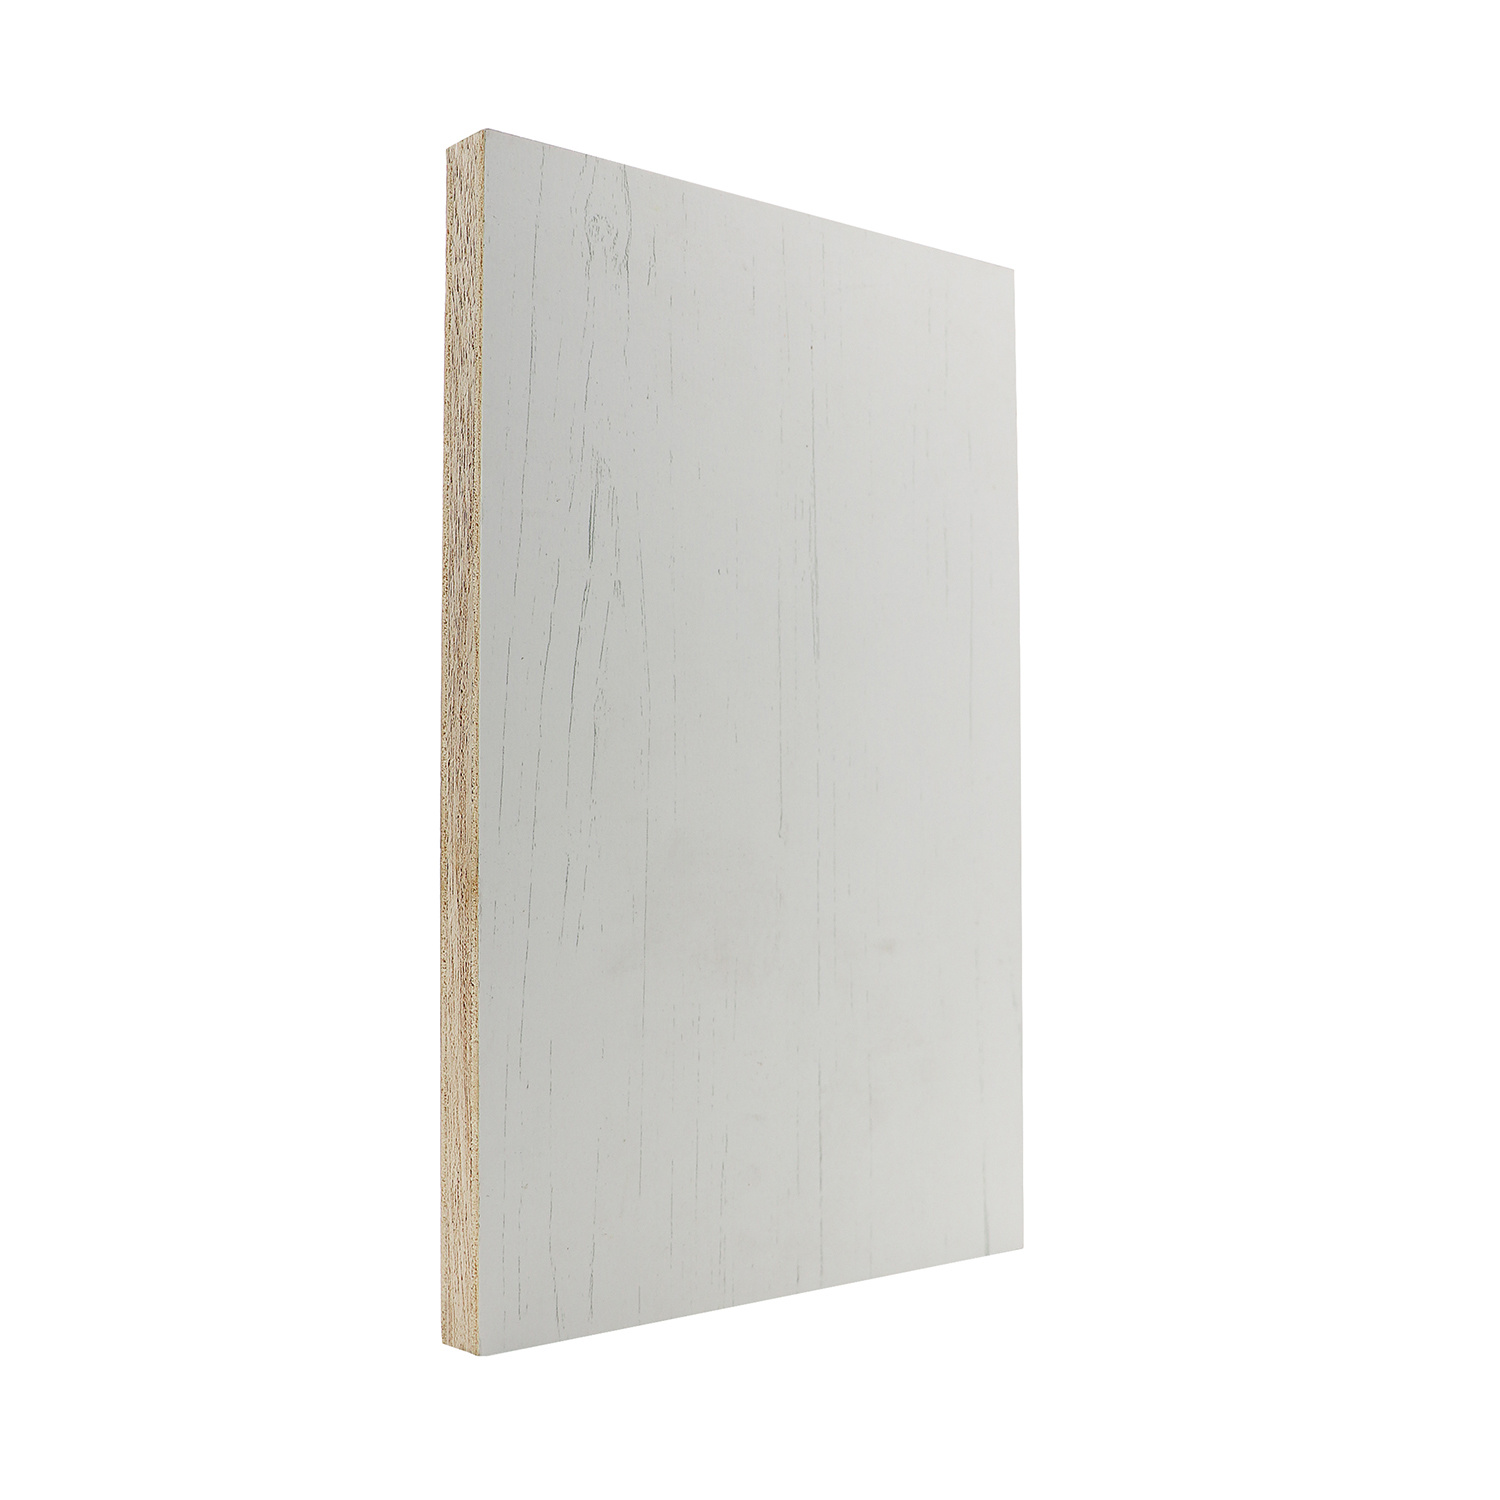 White Woodgrain Melamine Film Faced Plywood Laminated Plywood Board for Furniture